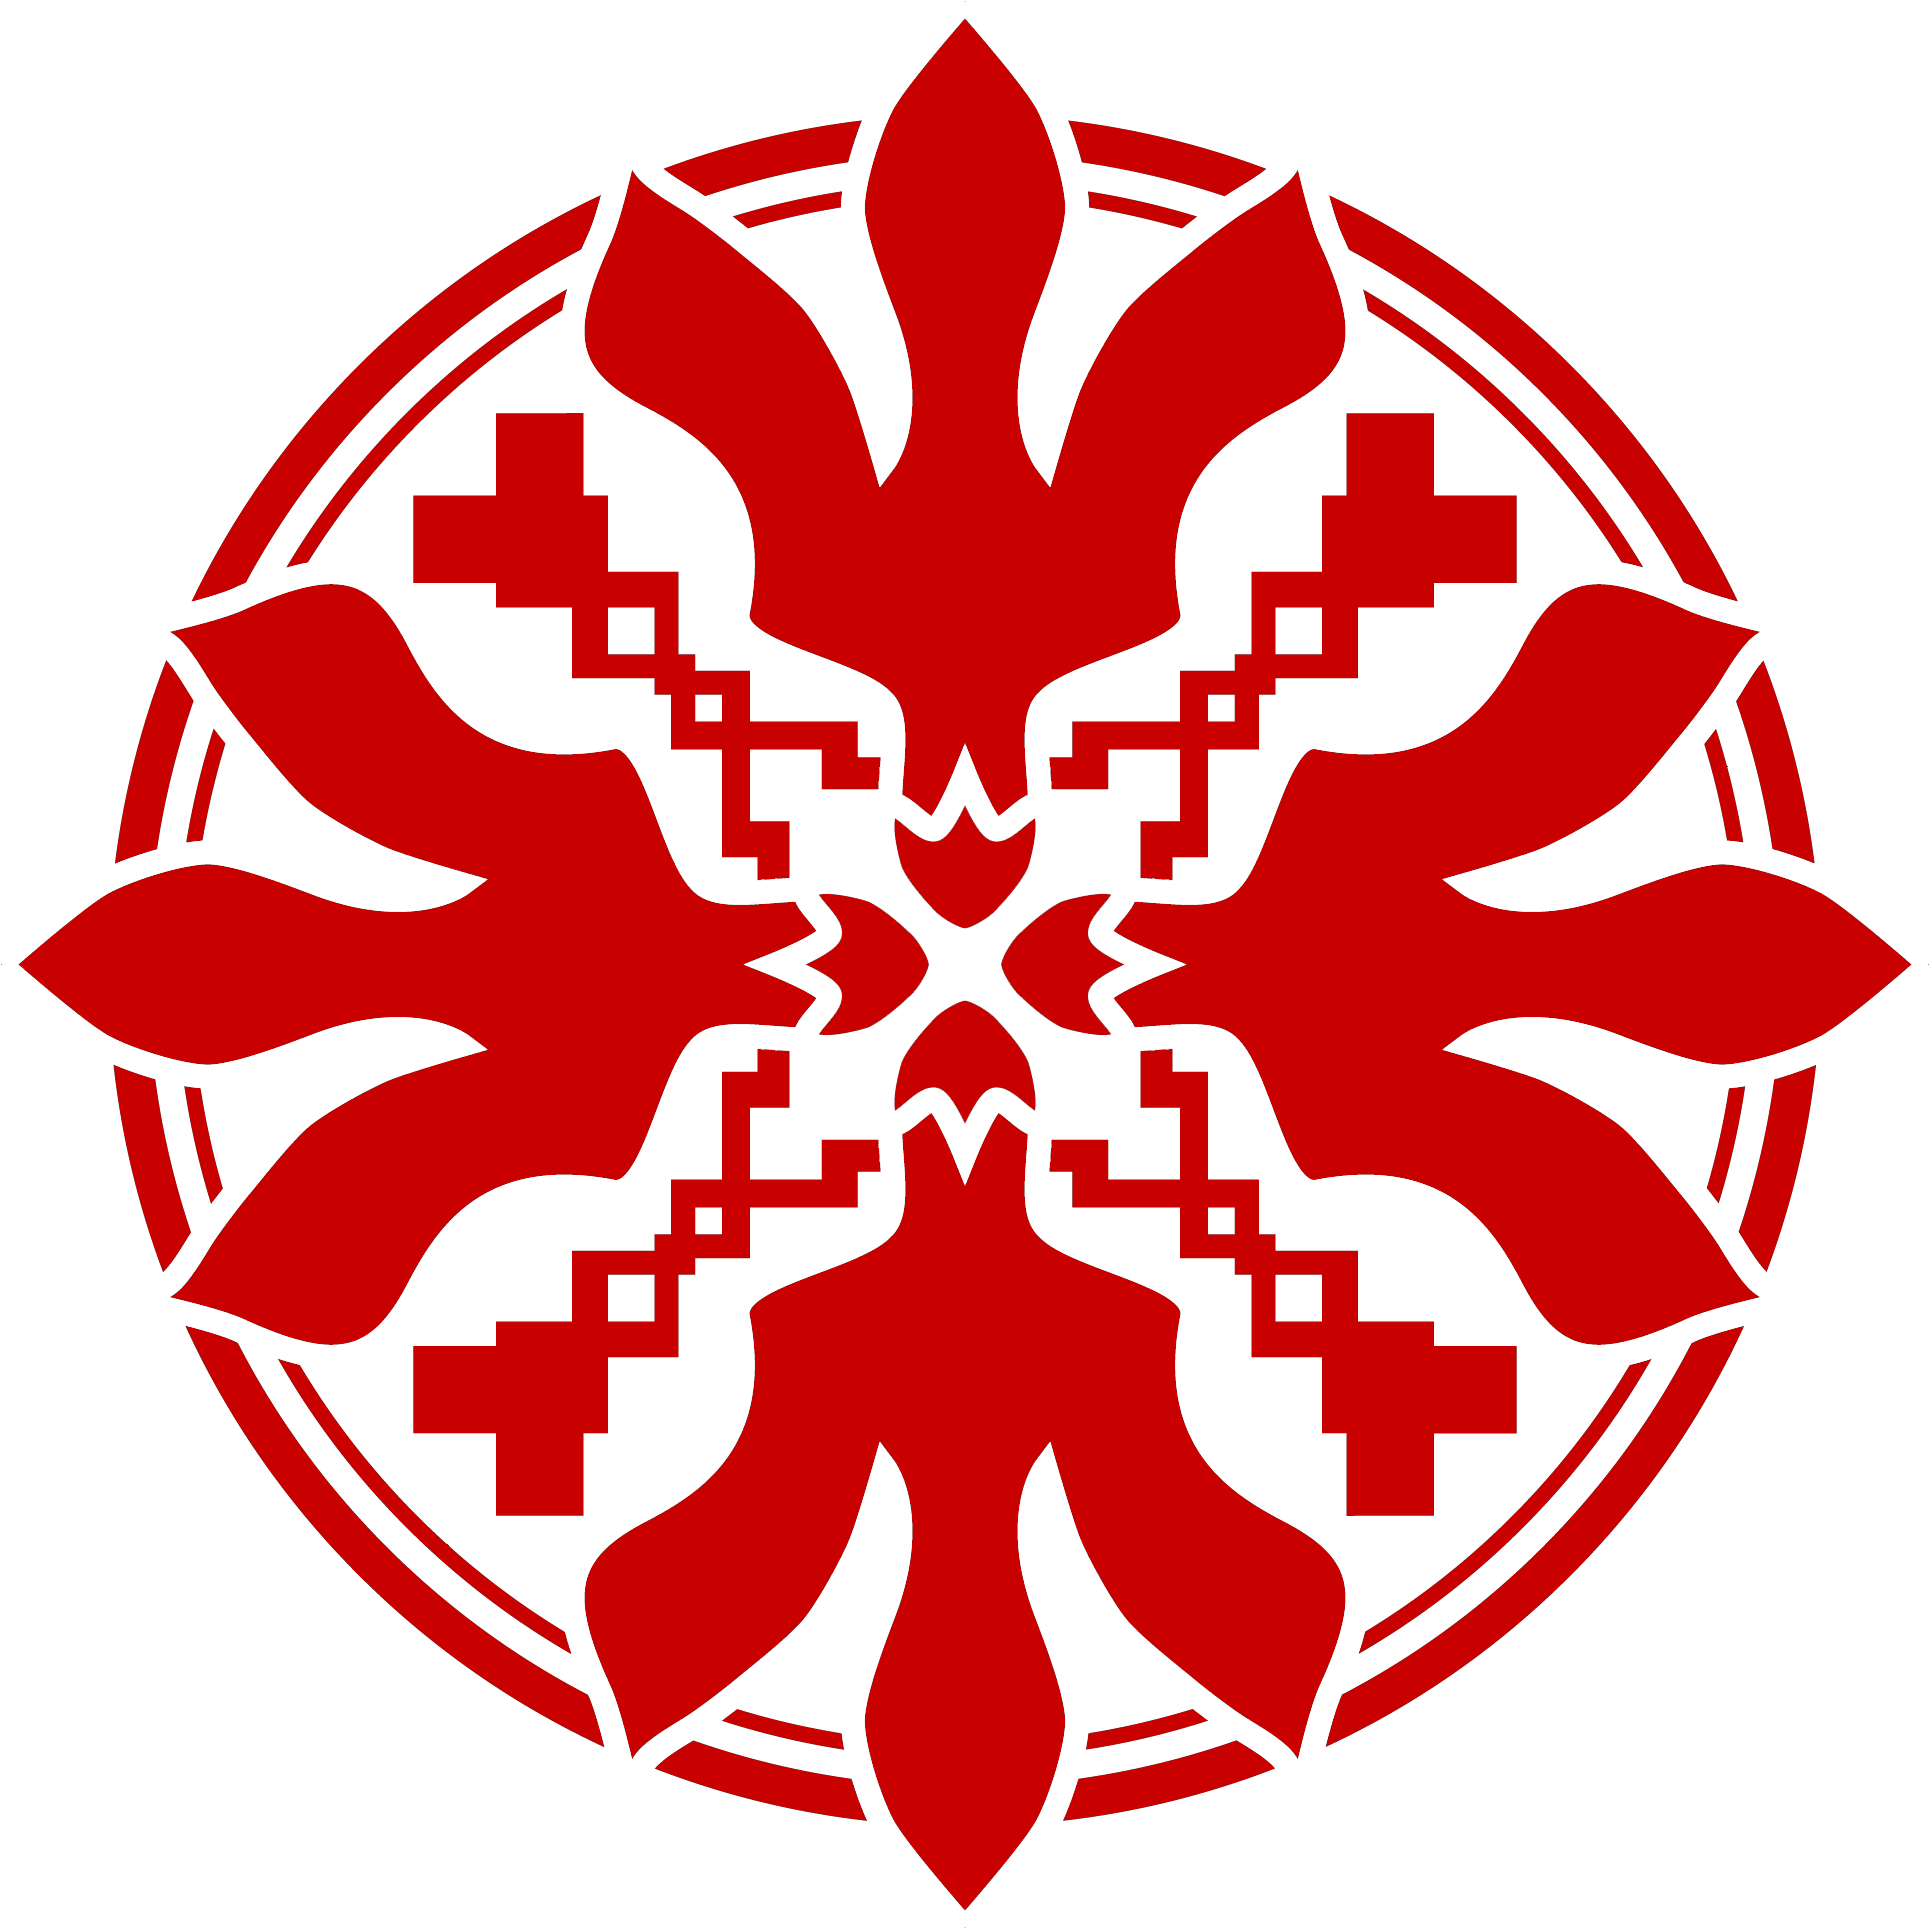 A Red And Black Circular Design